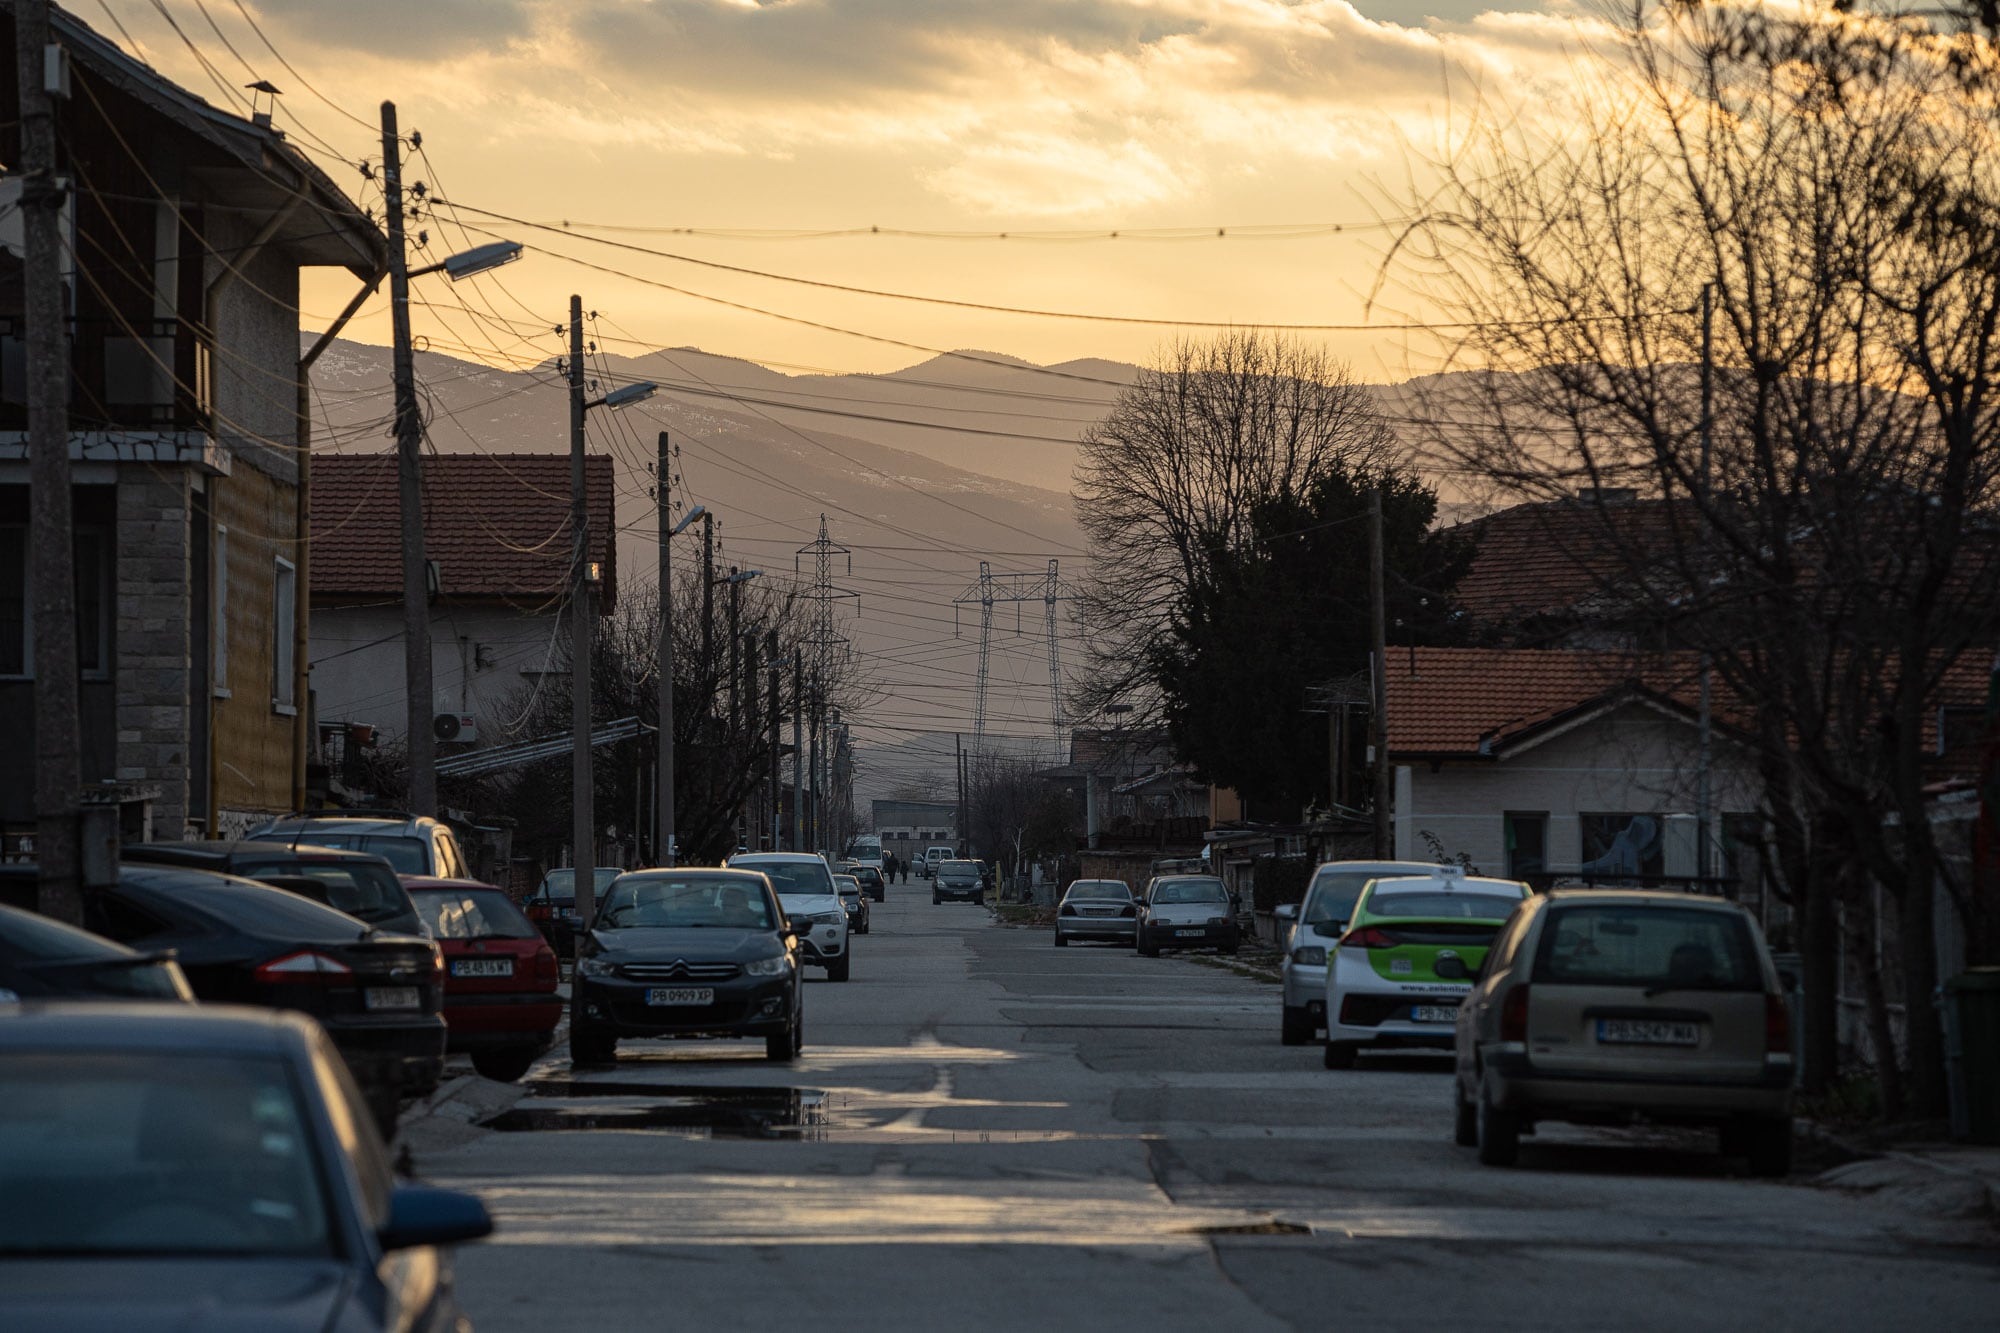 village of Yoakim Gruevo